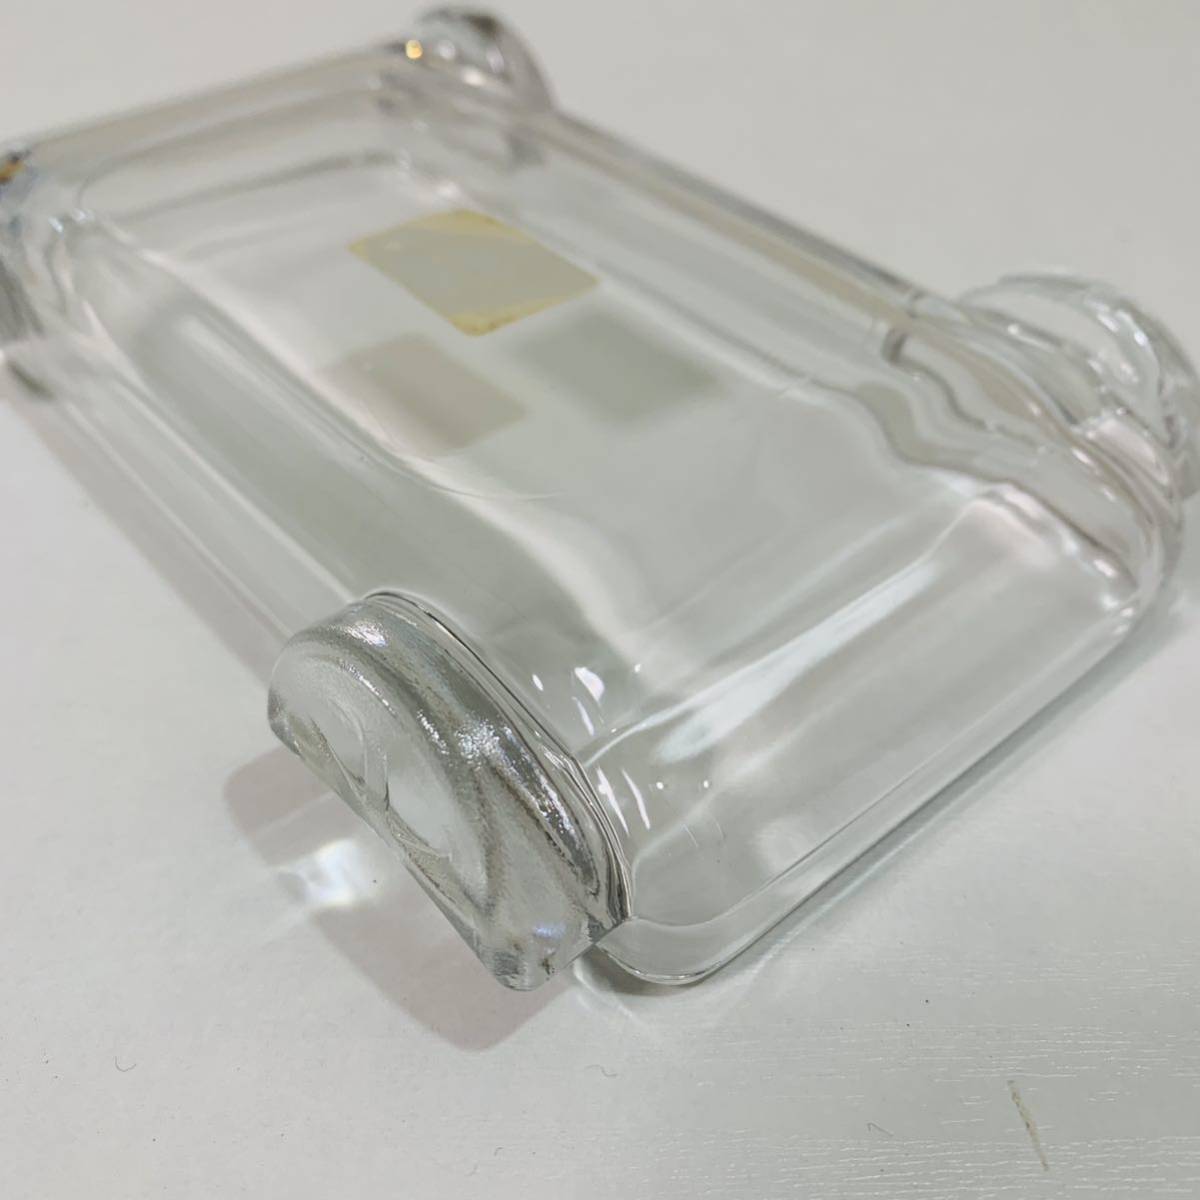 Etoile 日本製 車型 ガラス 小物入れ インテリア 置物 約20cmX10cmX8cm_画像6